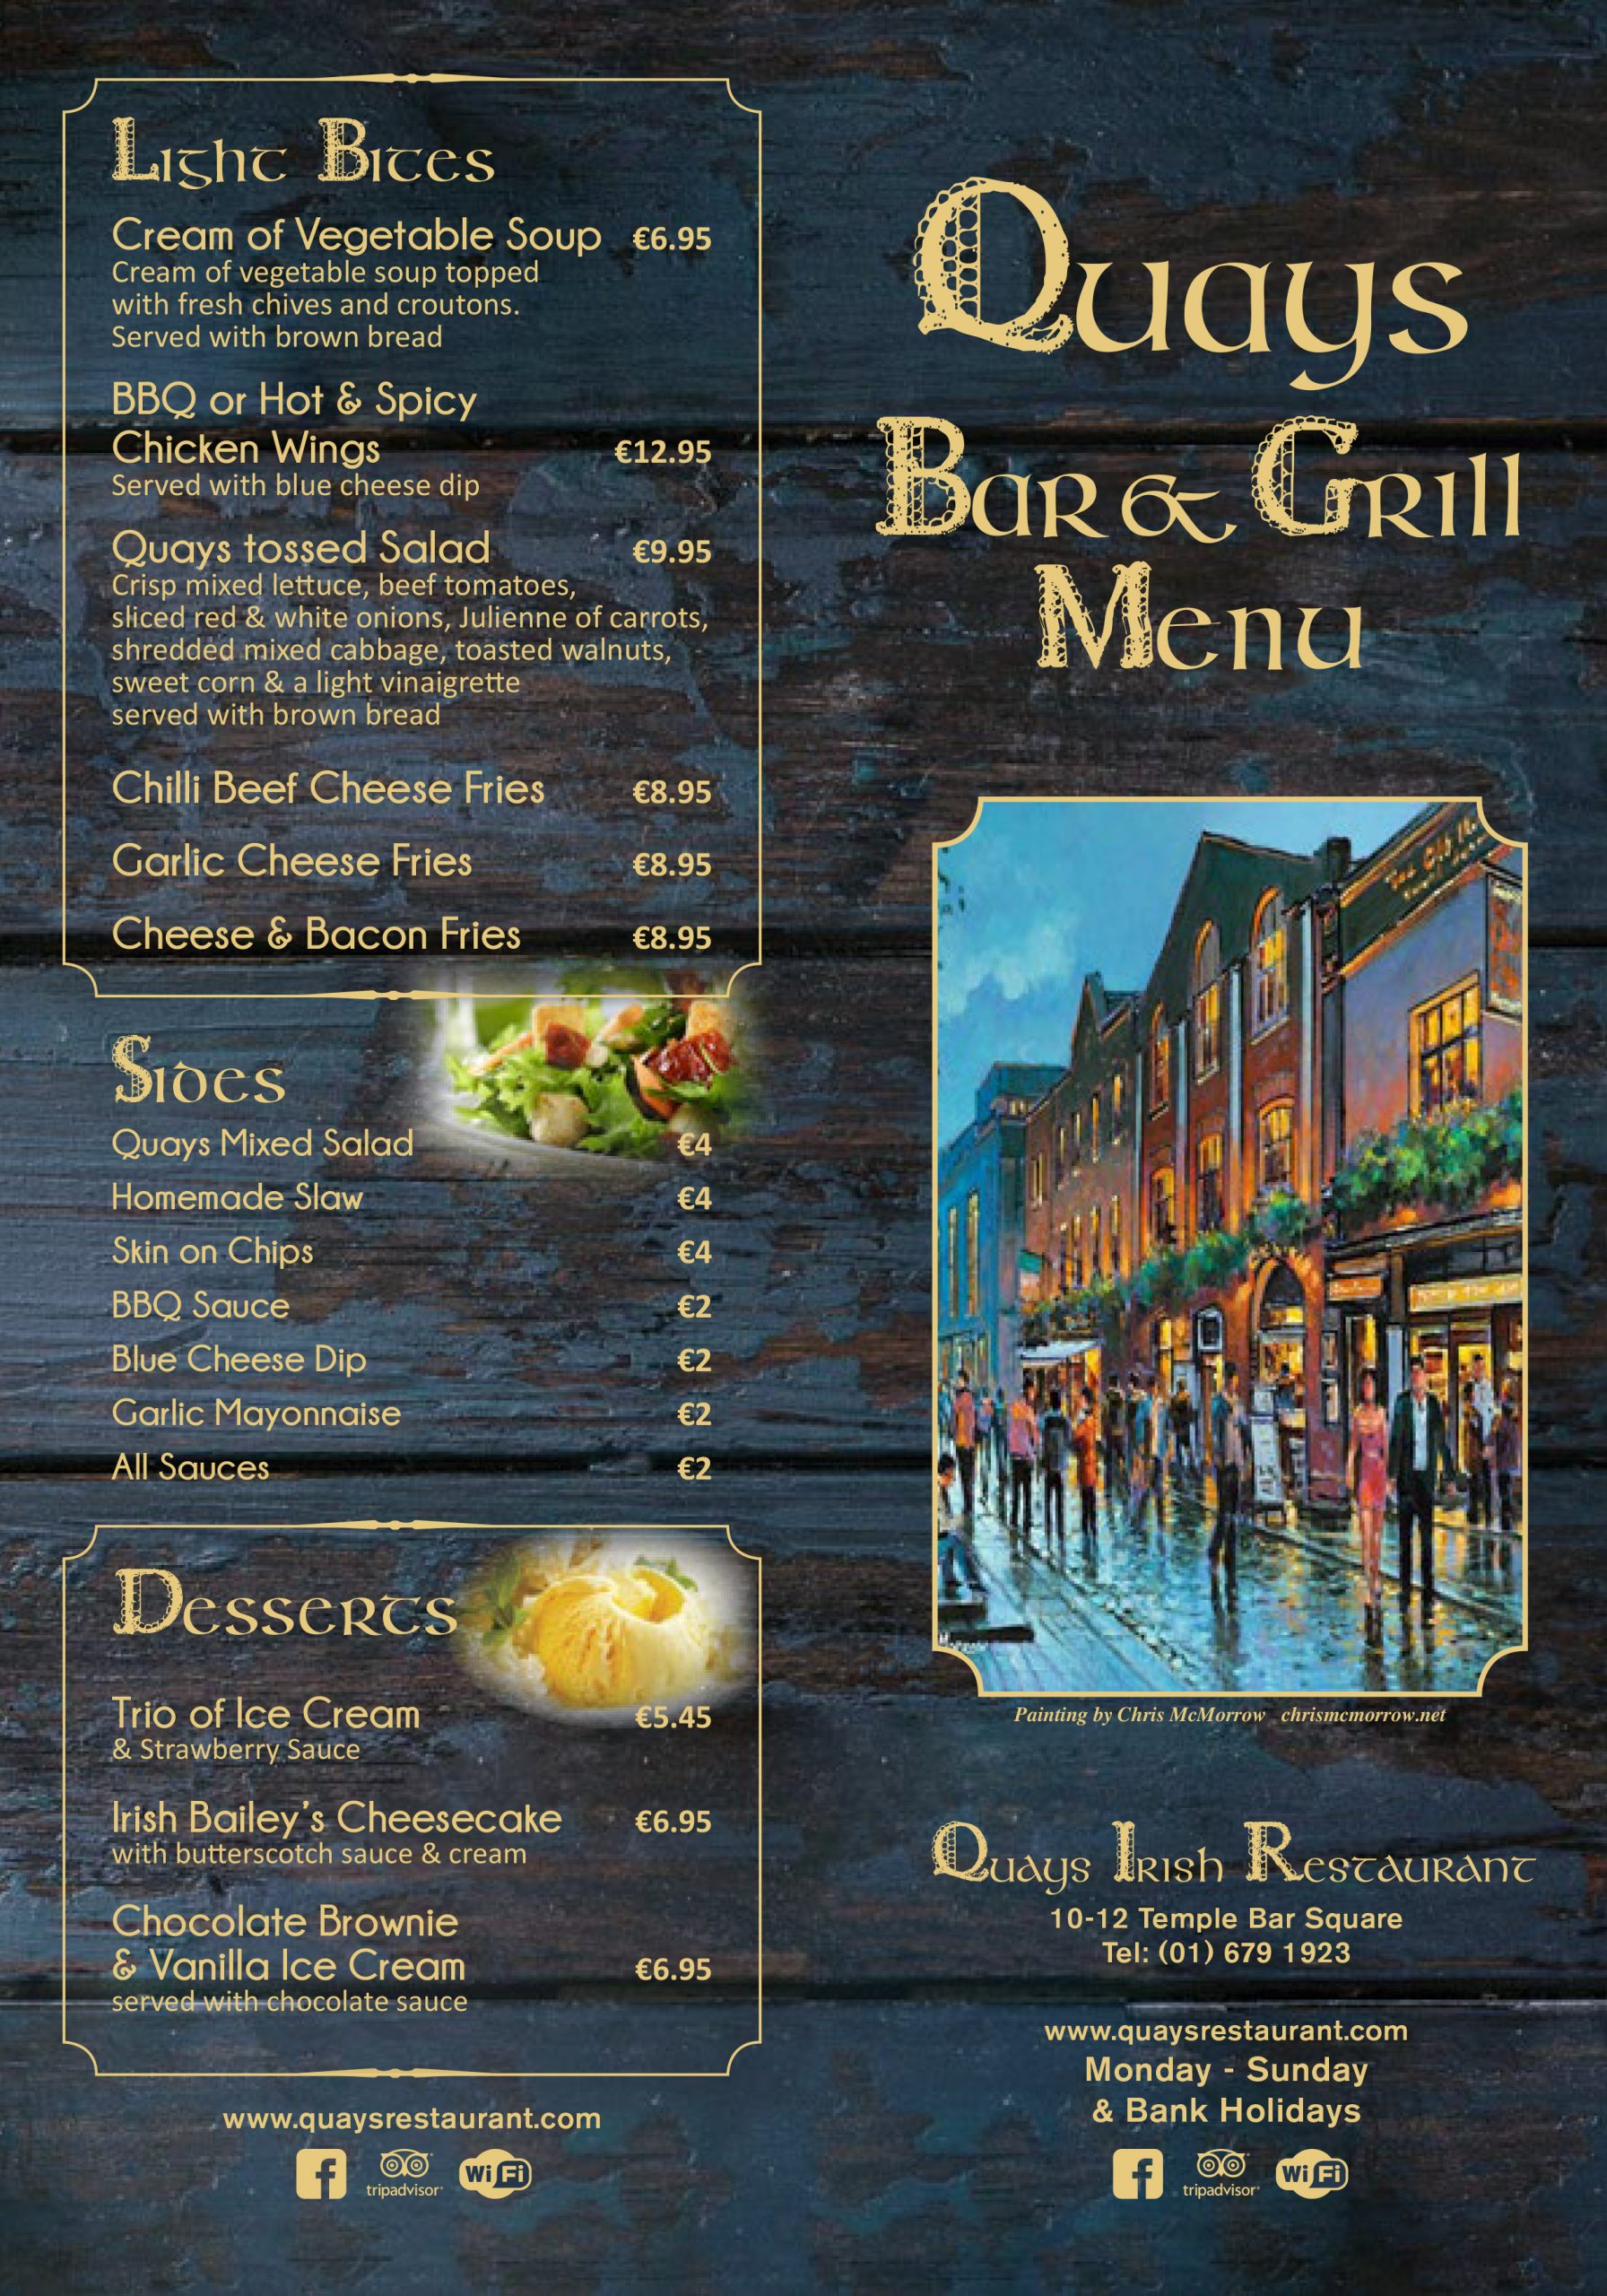 Quays bar & grill menu